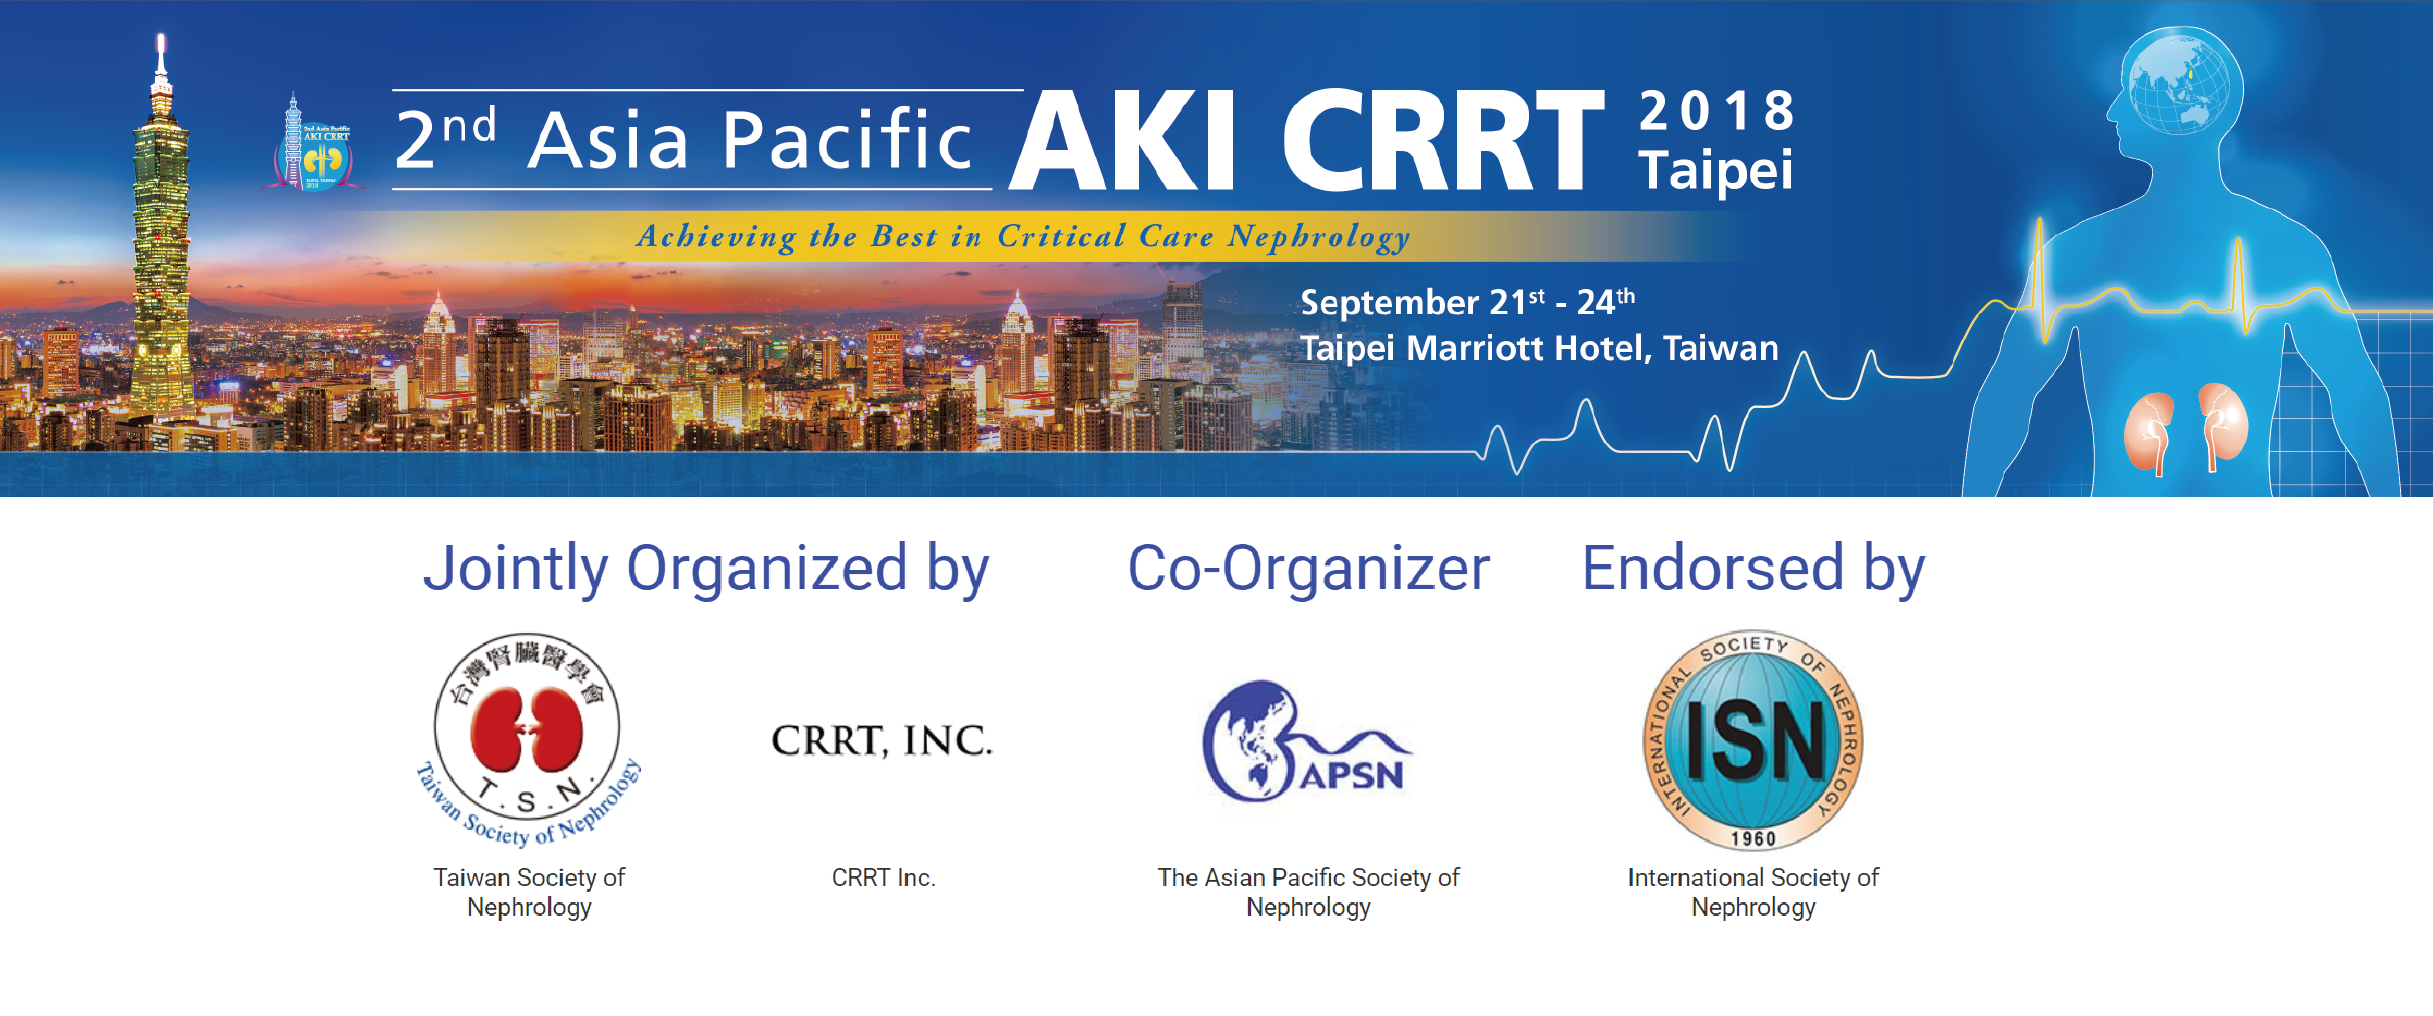 2nd Asia Pacific AKI CRRT 2018 Taipei